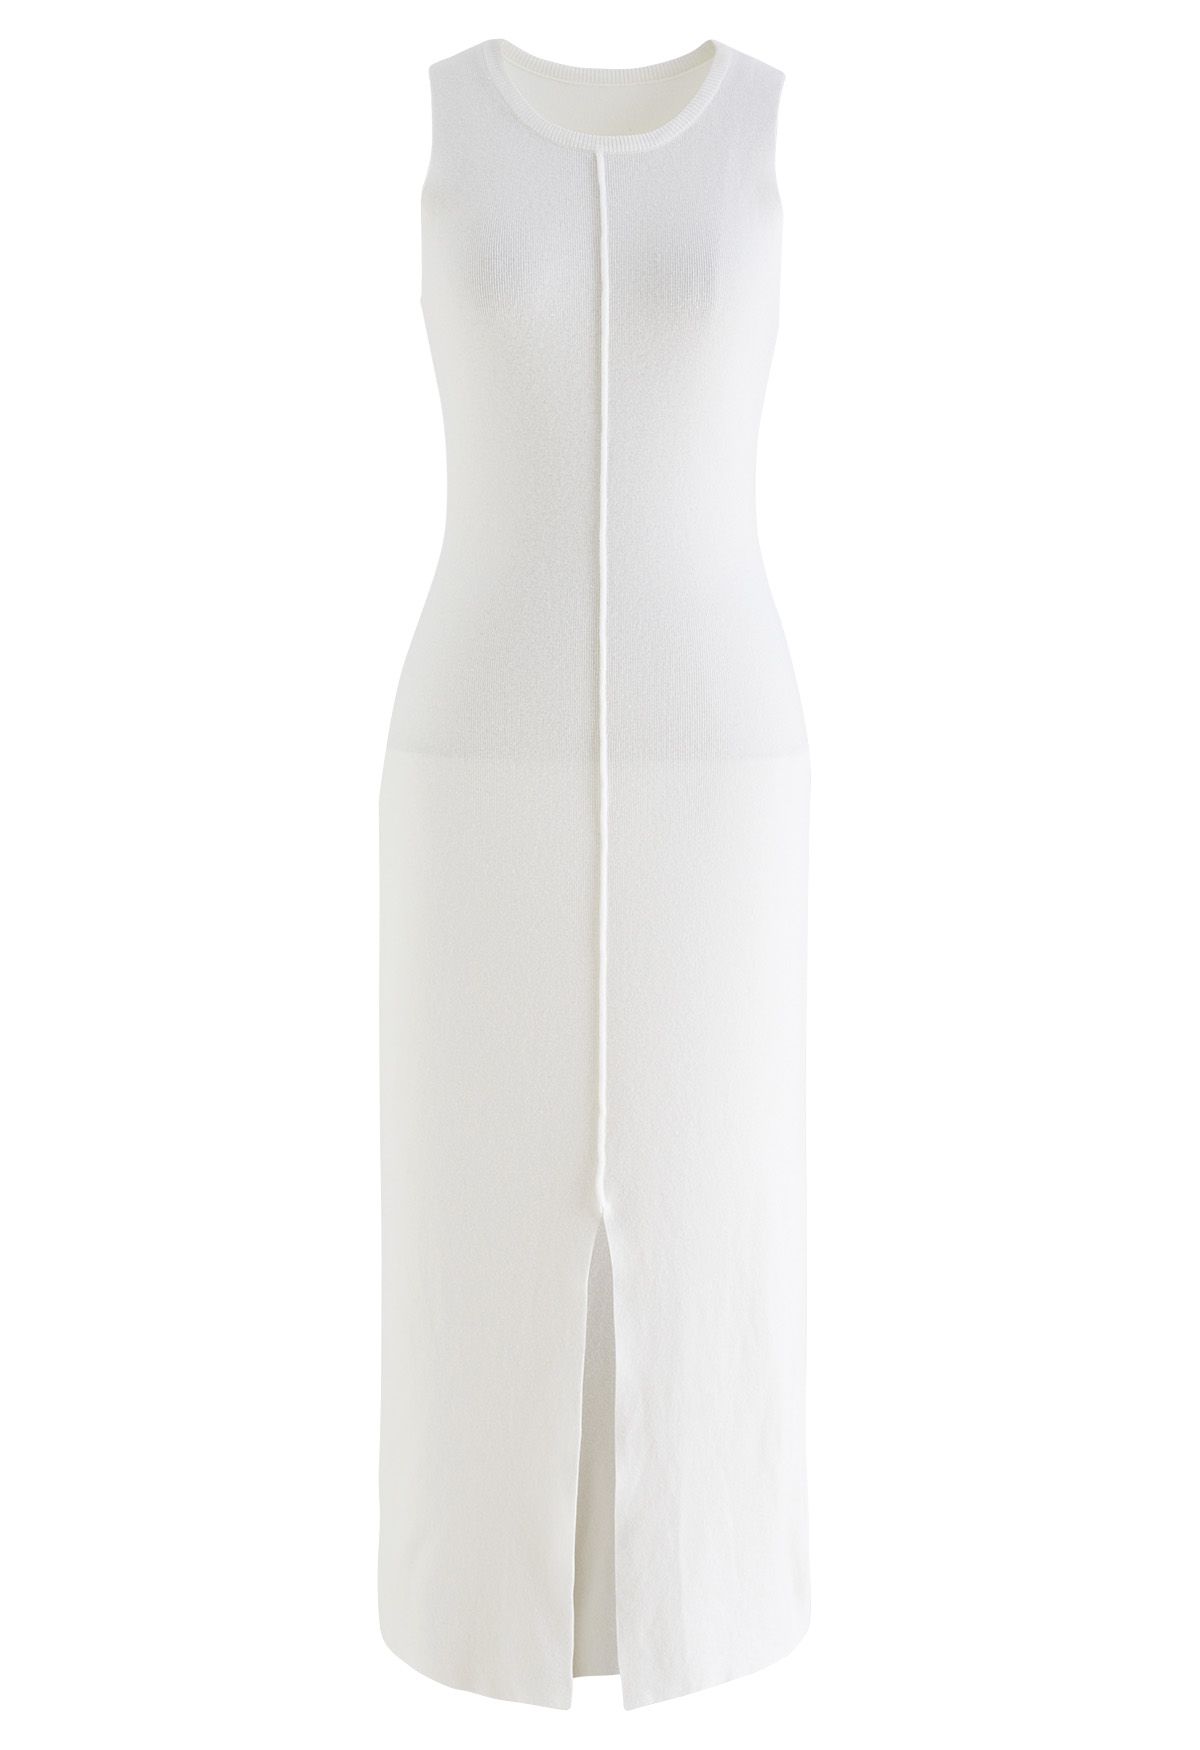 White dress that will carry you through till autumn by Tamara Bellis